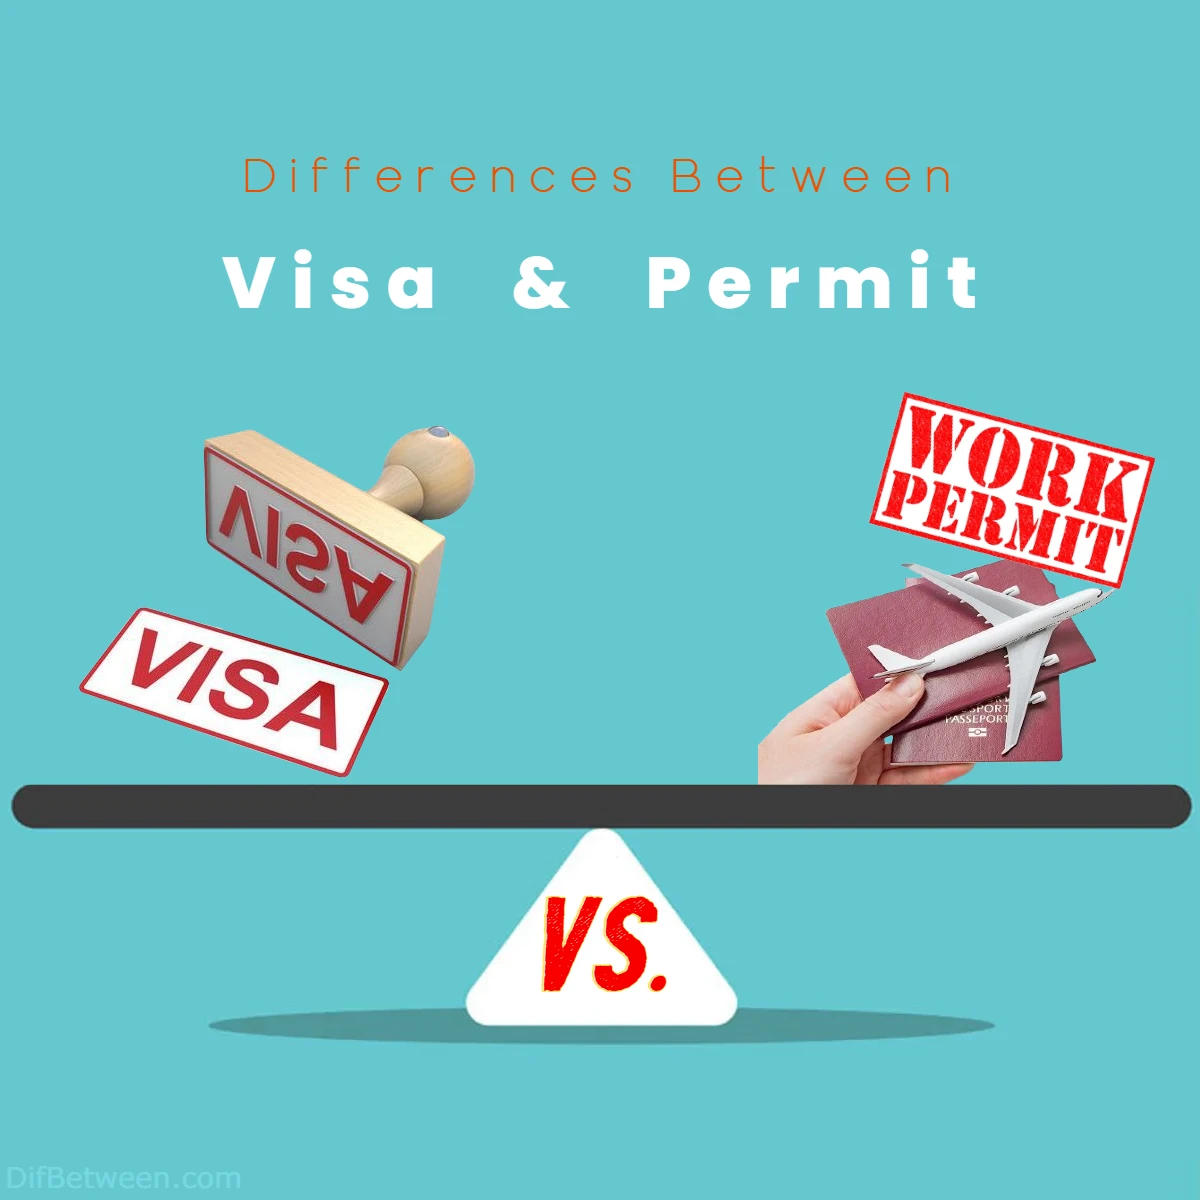 Differences Between Visa vs Permit